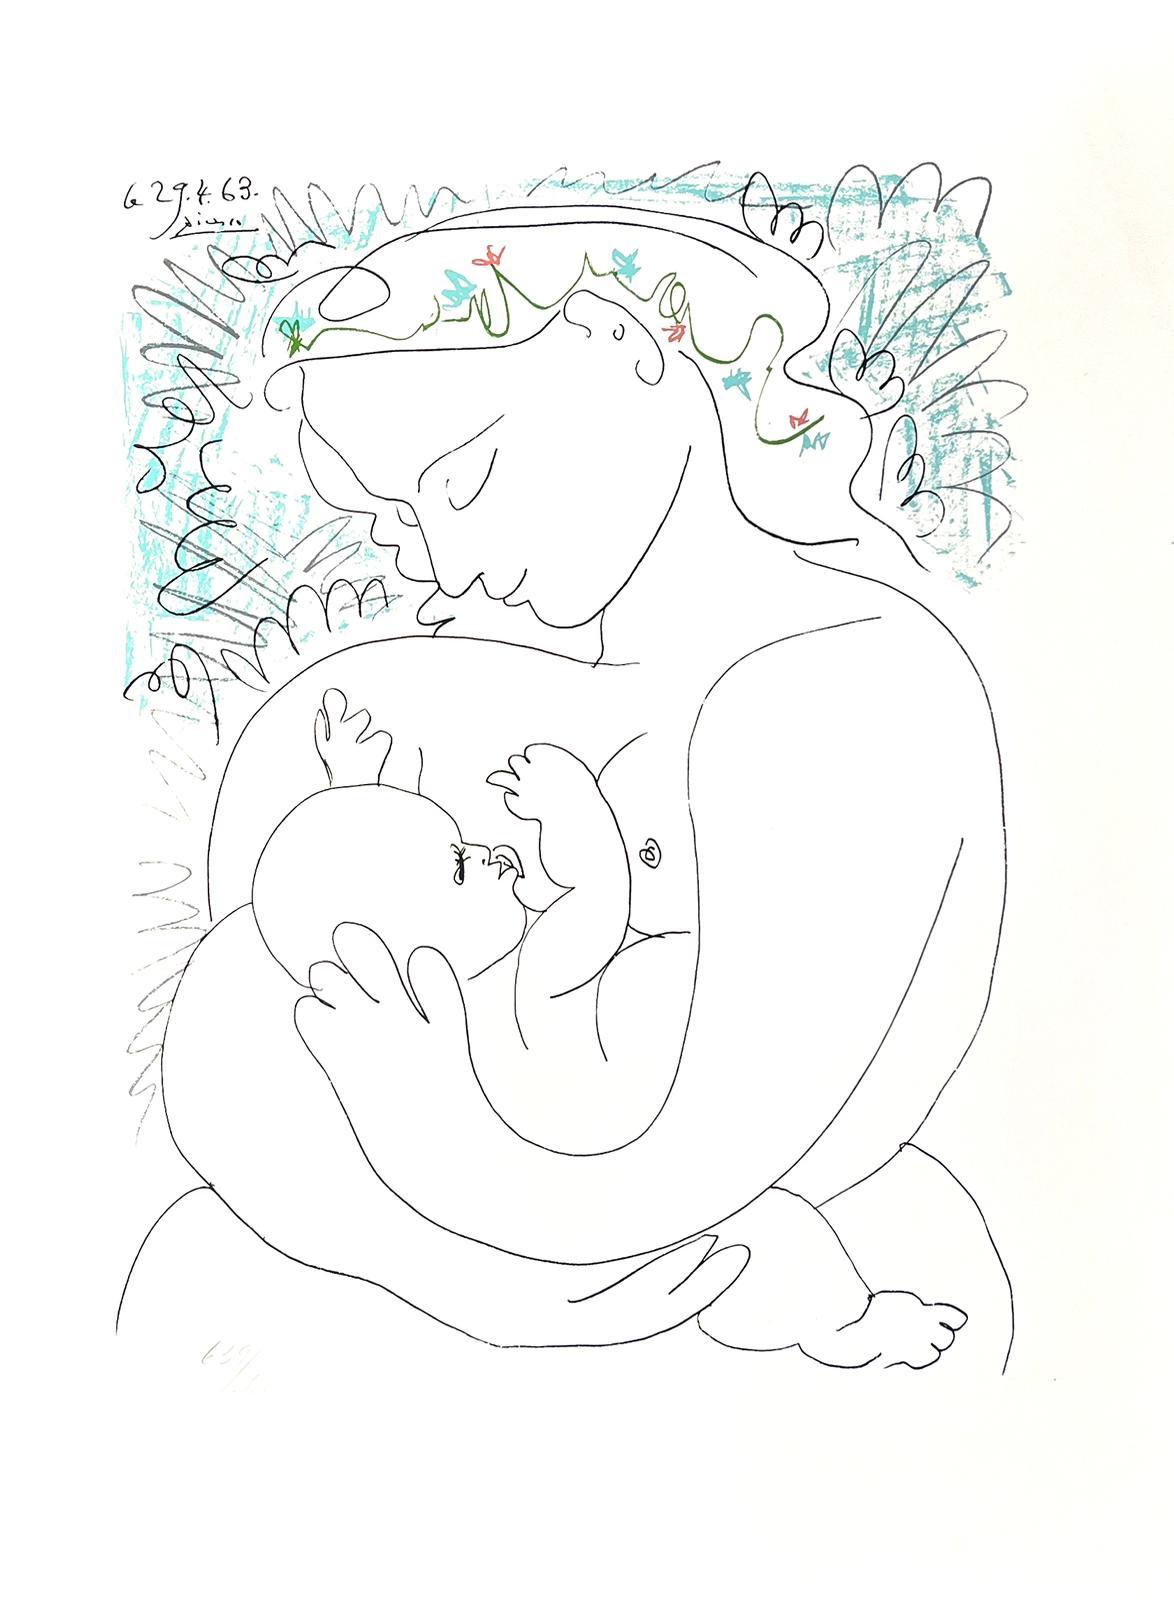 (after) Pablo Picasso Portrait Print – Maternity nach Pablo Picasso, Farblithographie von SPADEM 1983 